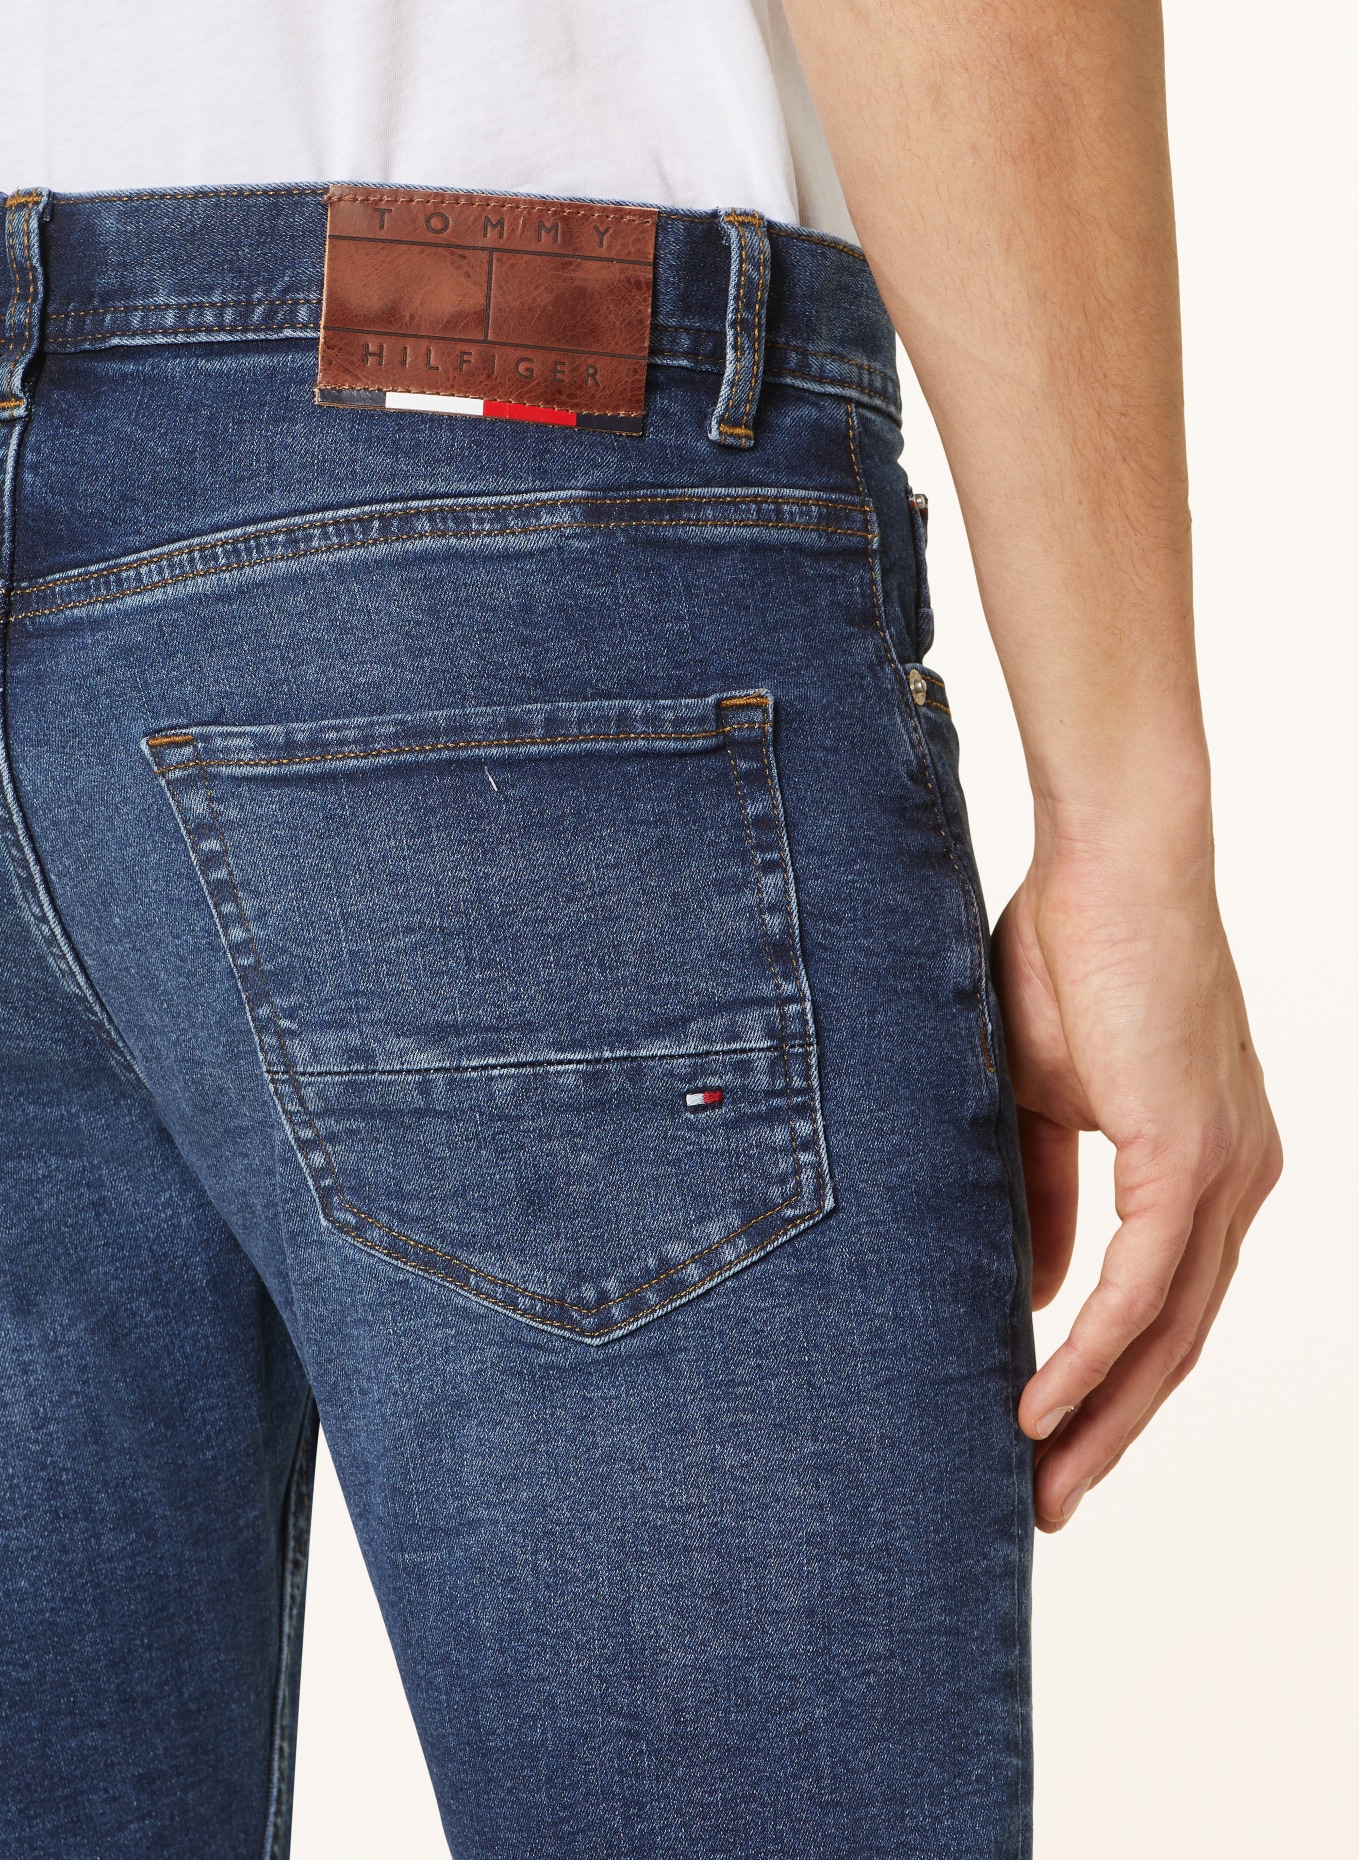 TOMMY HILFIGER Jeans HOUSTON Slim Tapered Fit, Farbe: 1BK Simone (Bild 6)